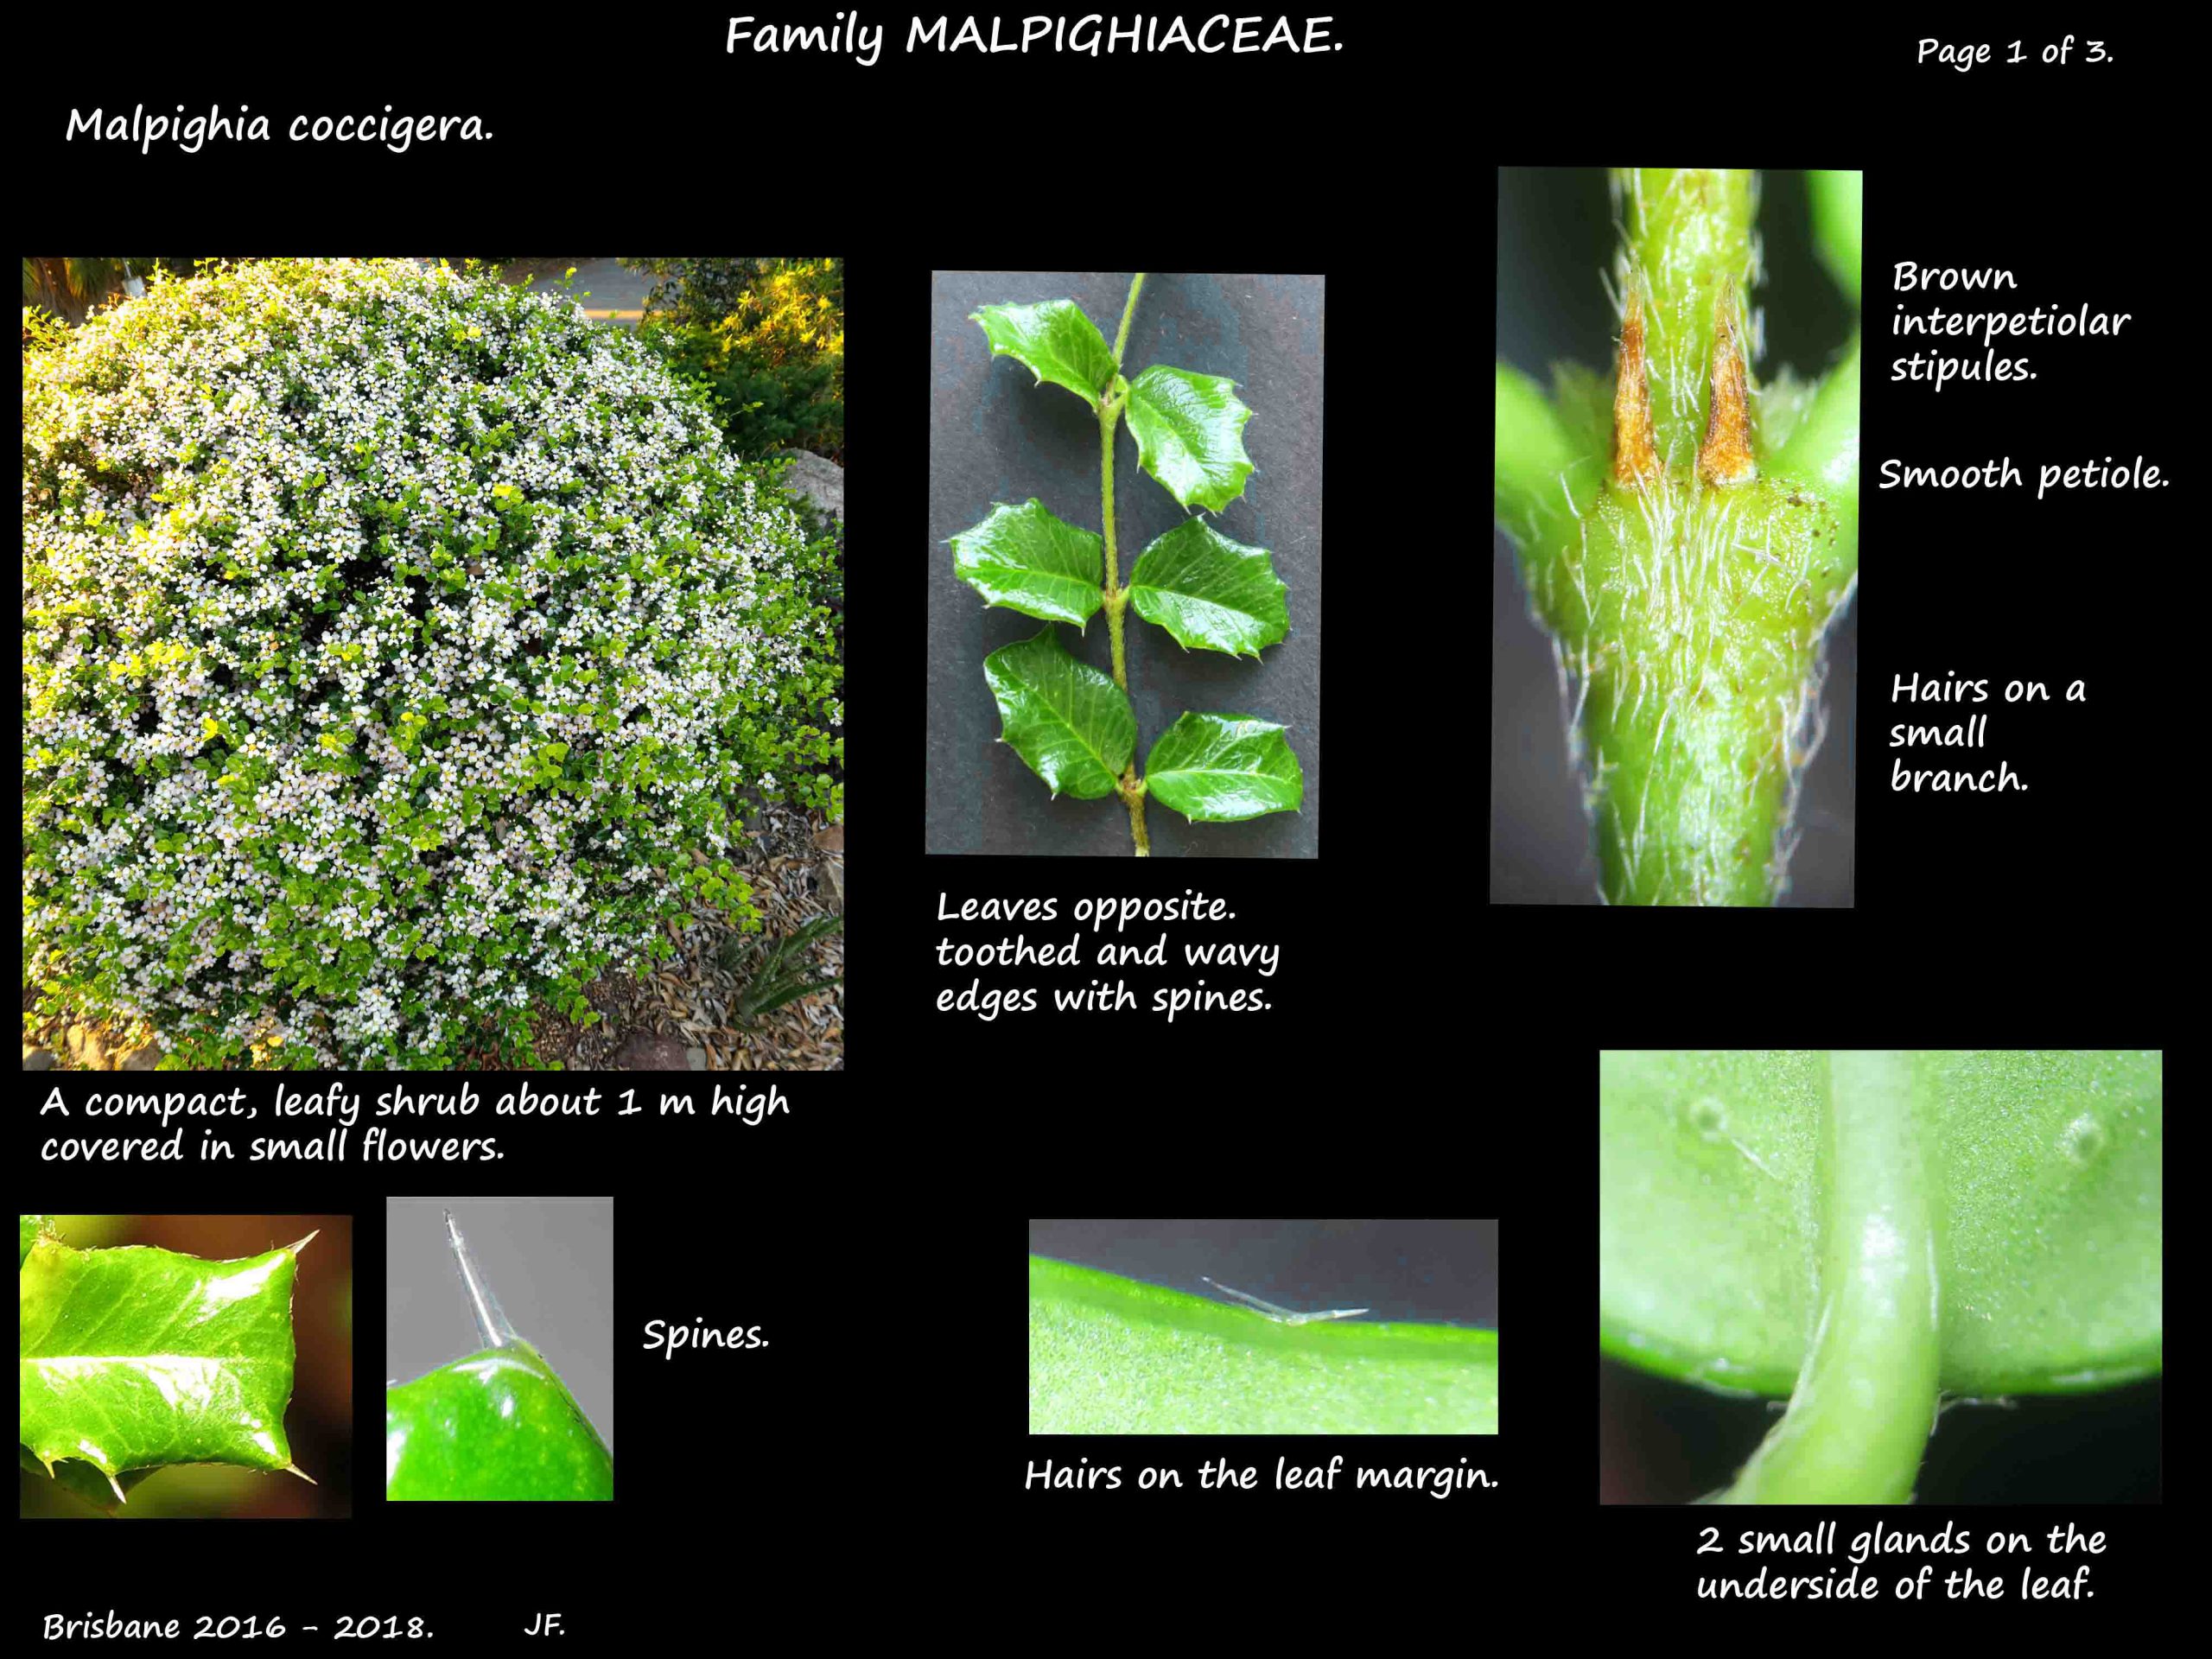 1 Dwarf Holly shrub & leaves